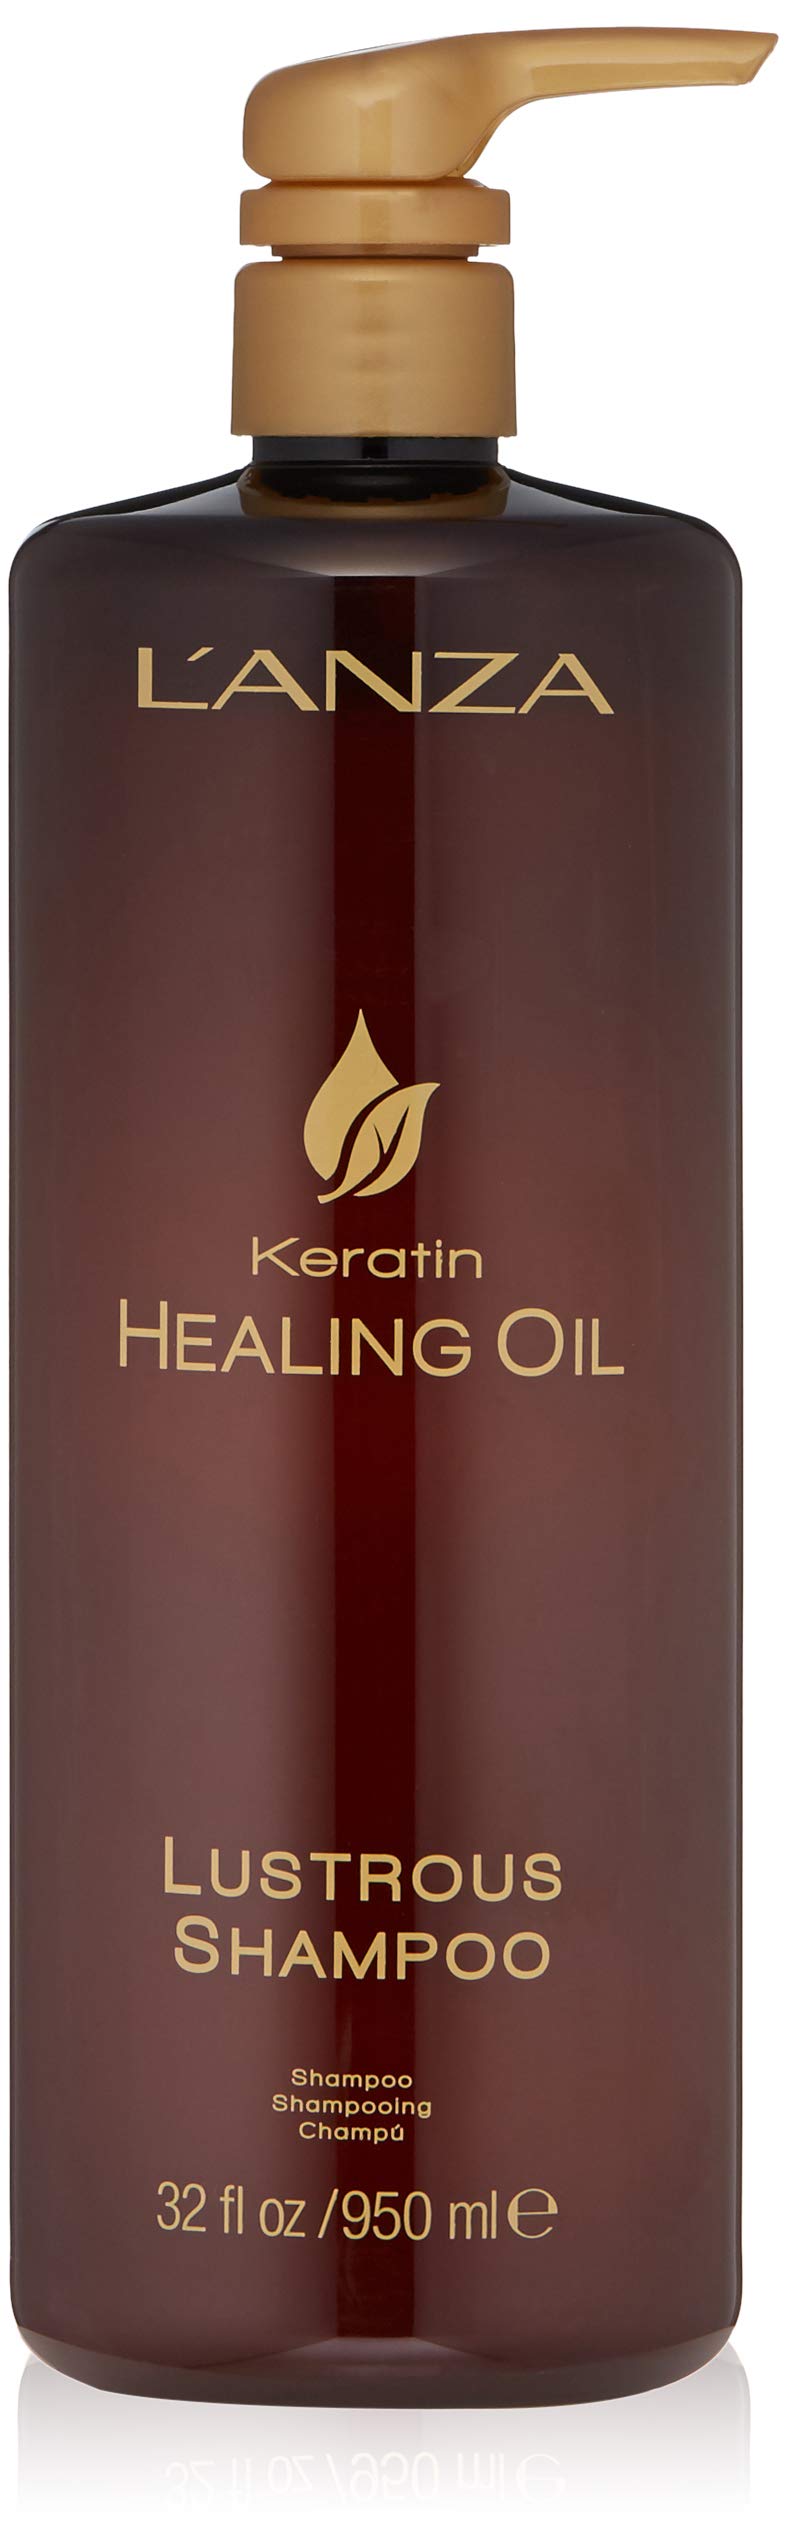 Lanza Keratin Healing Oil ShampooLANZASize: 32 oz